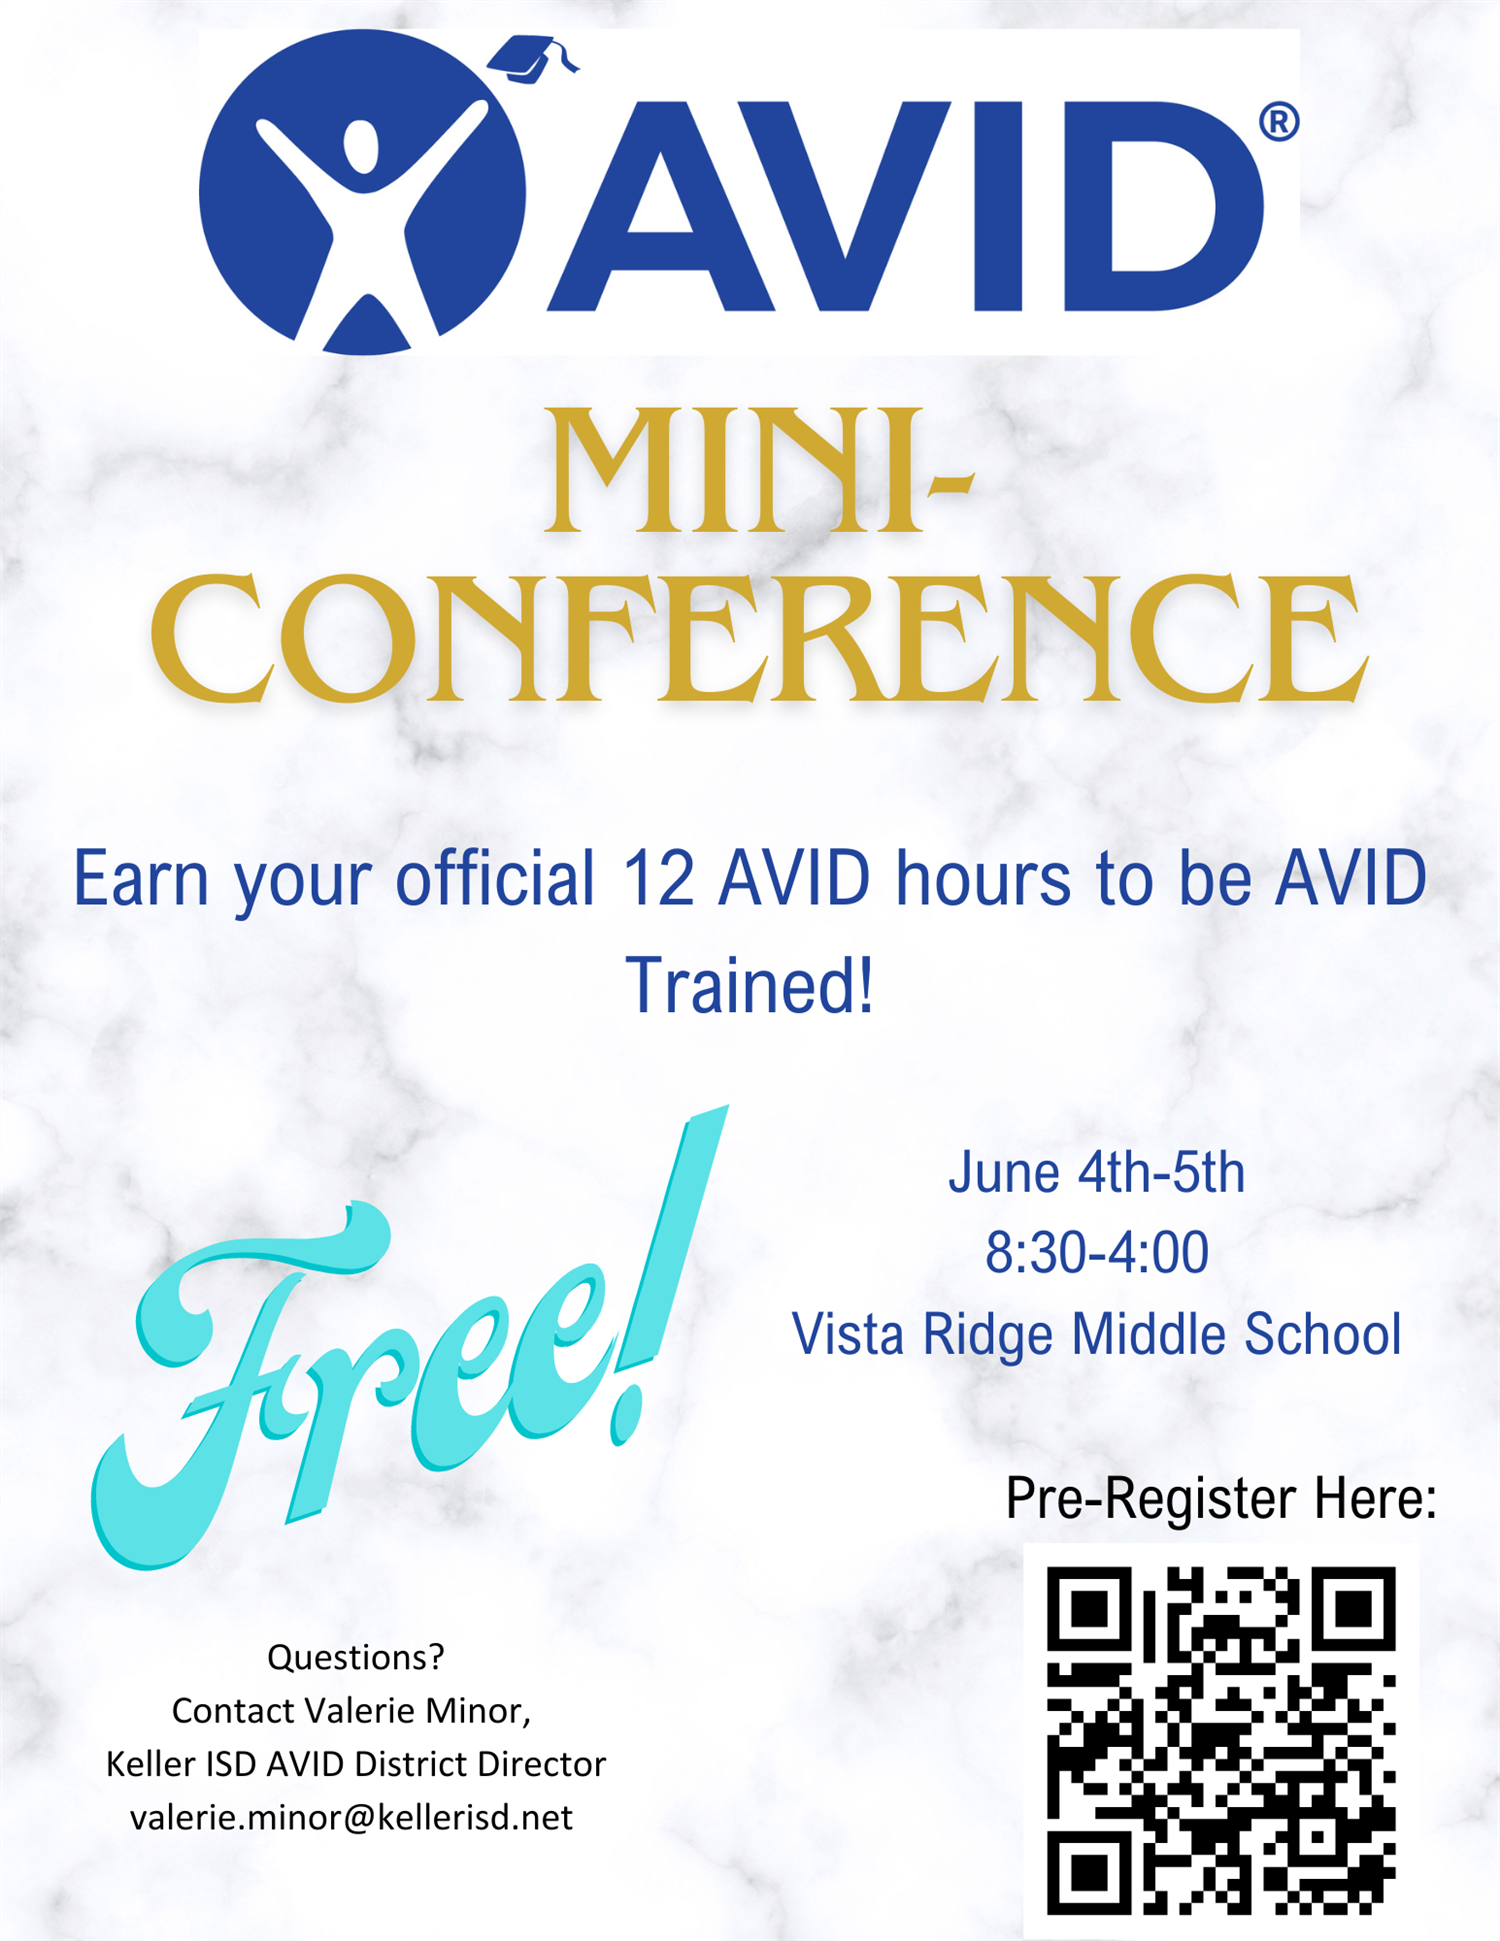 AVID mini conference Flyer